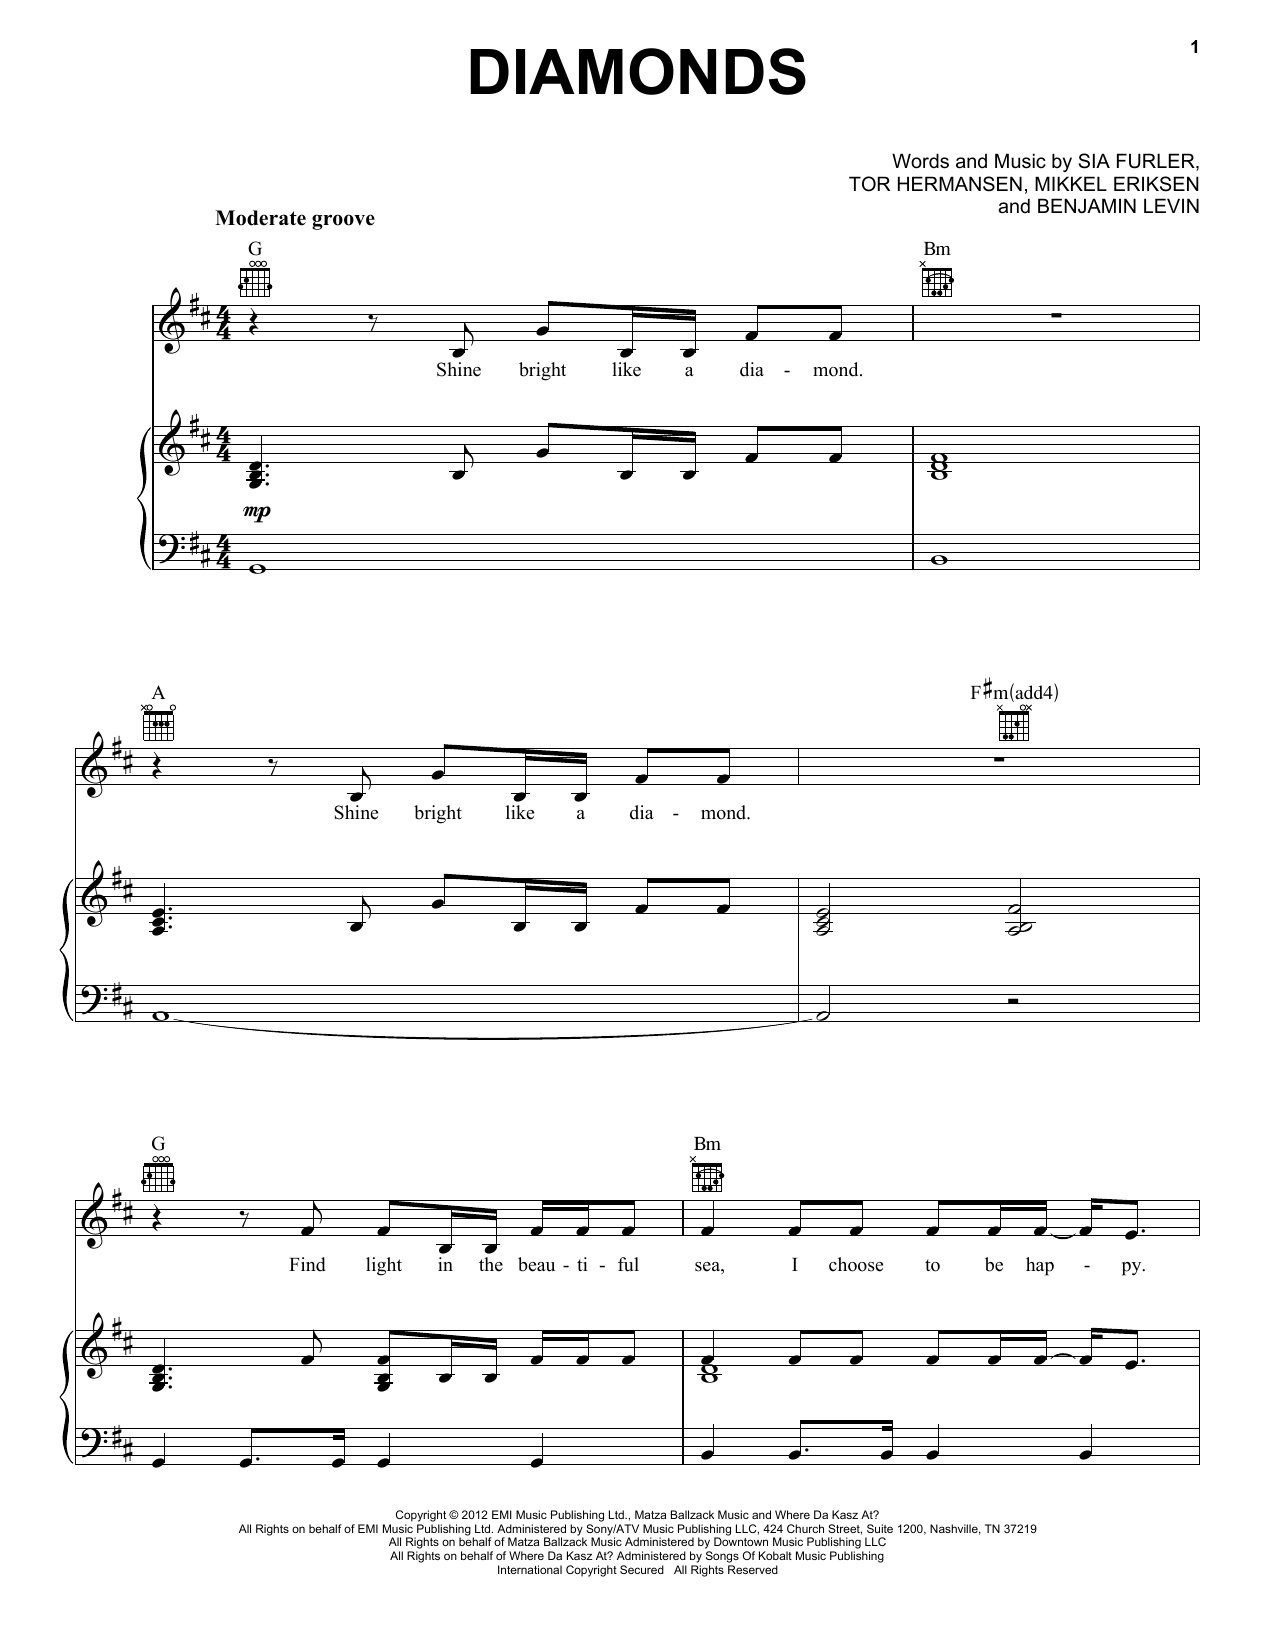 Rihanna Diamonds sheet music notes printable PDF score